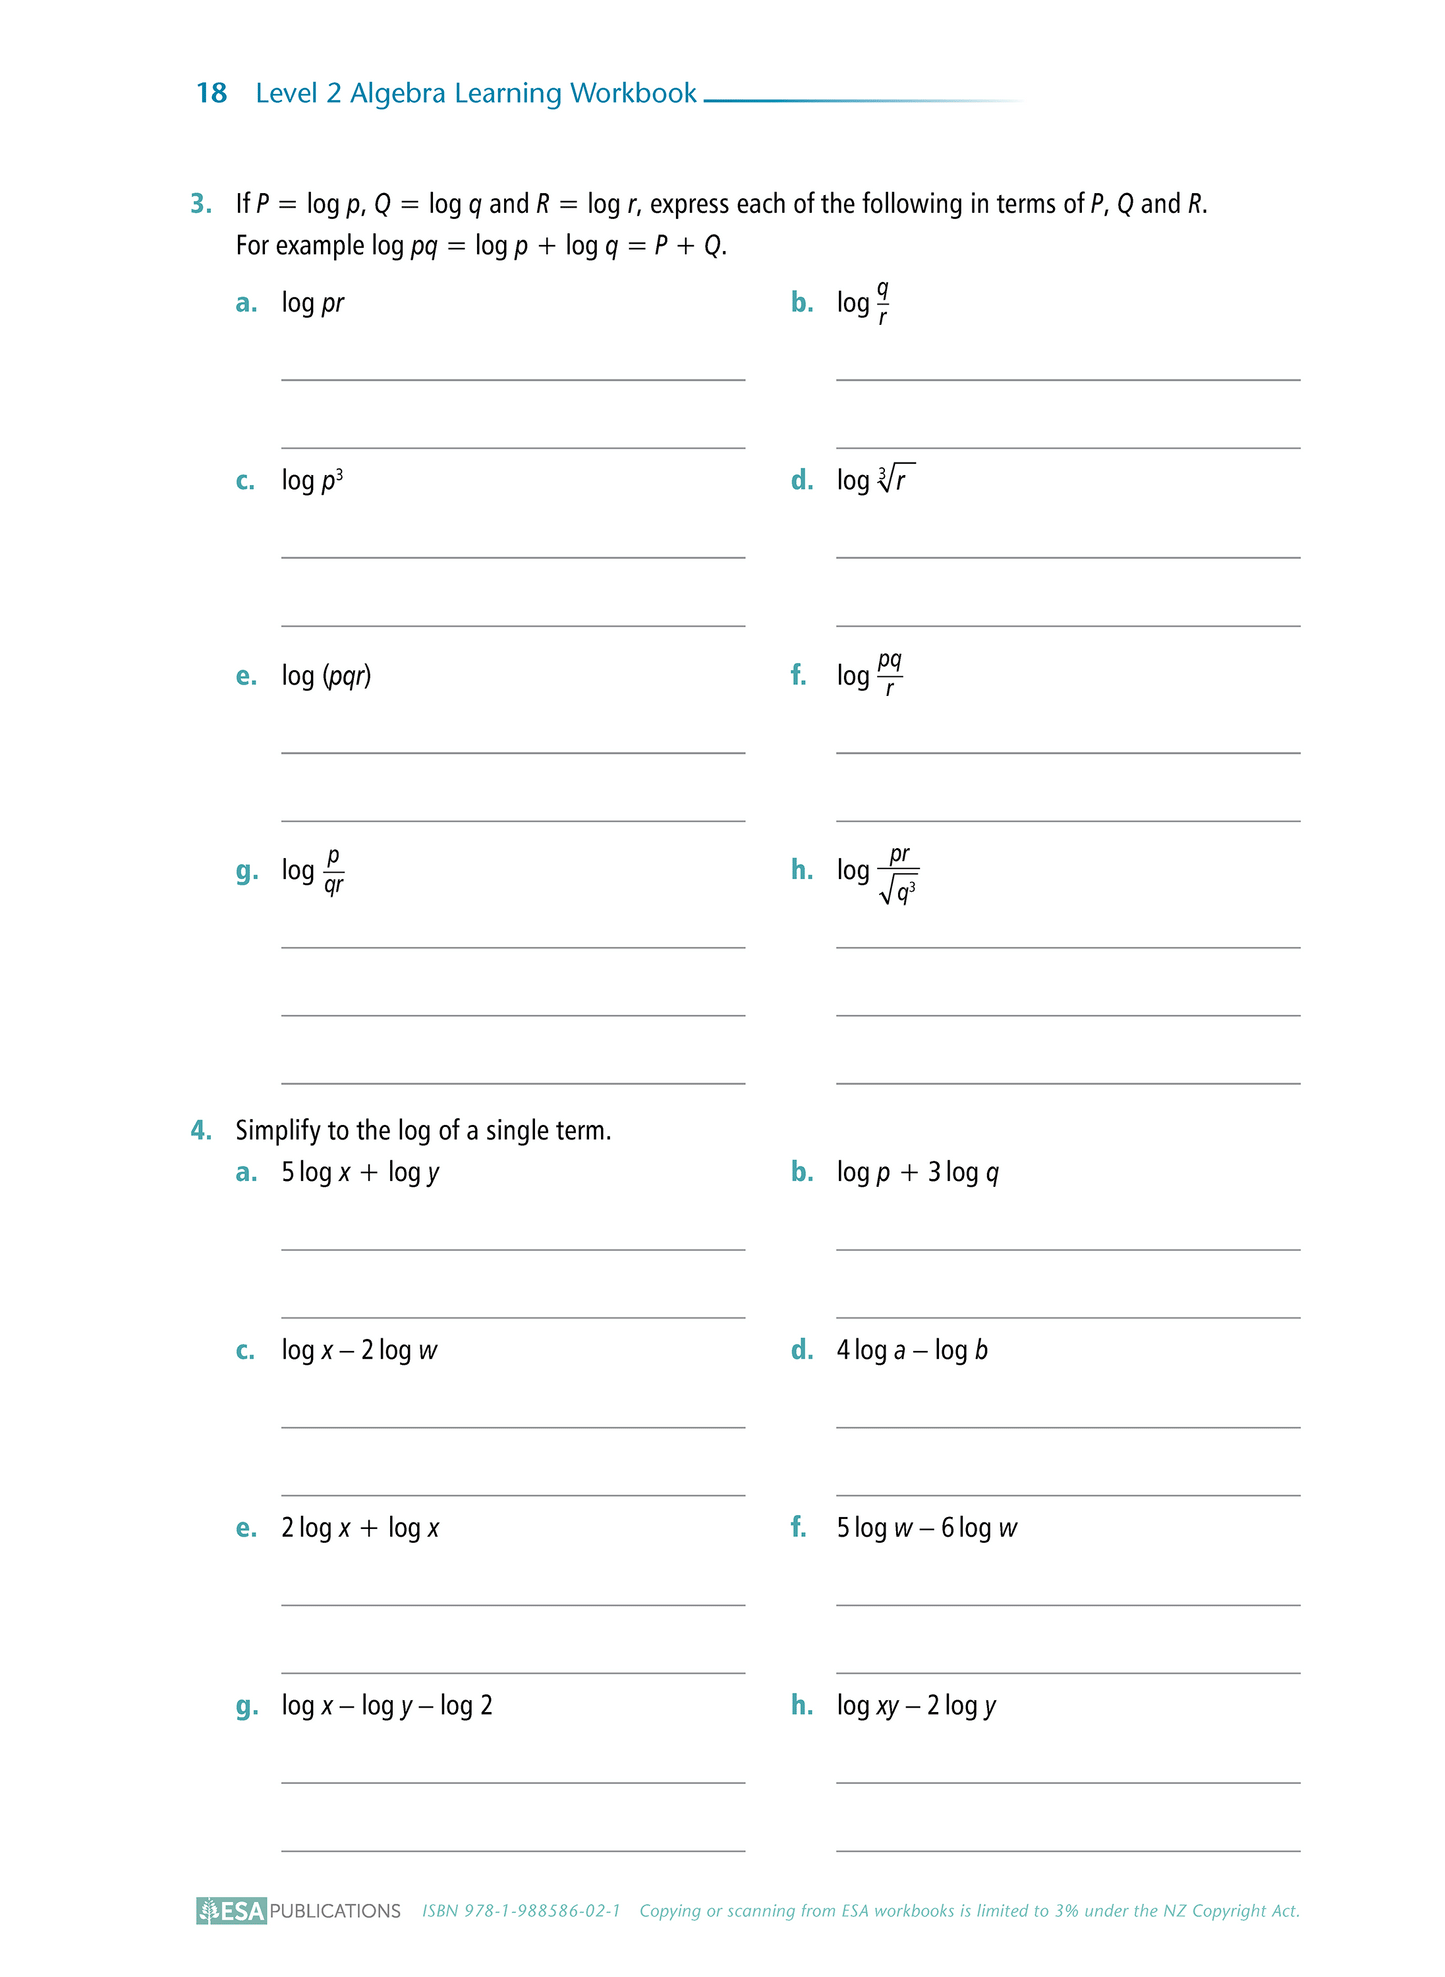 Level 2 Algebra 2.6 Learning Workbook